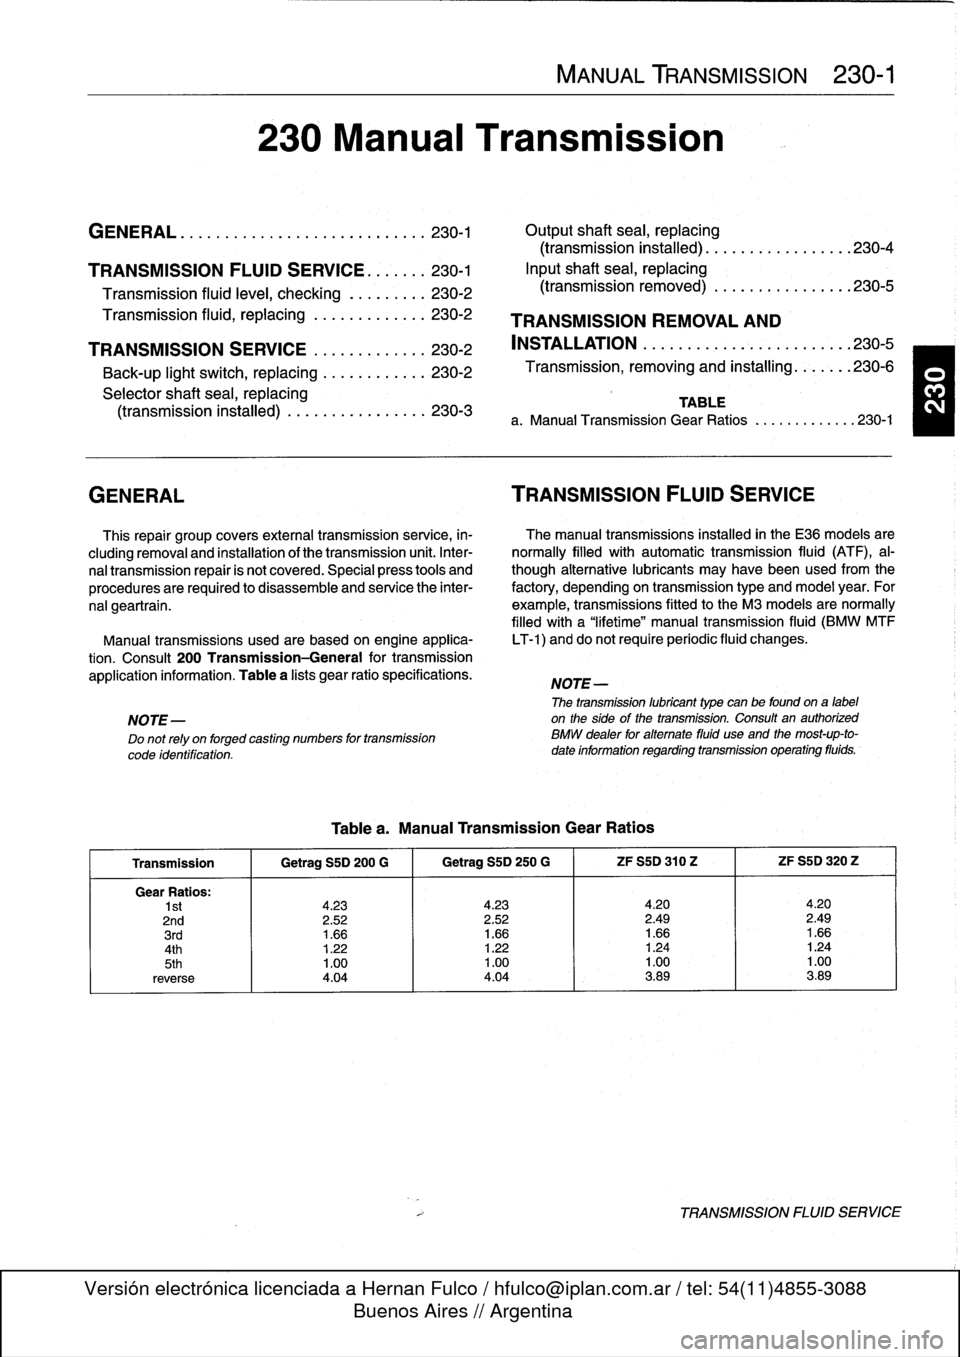 BMW 318i 1997 E36 Manual PDF 
230
Manual
Transmission

MANUAL
TRANSMISSION

	

230-1

GENERAL
...
.
............
.
.......
.
.
.
.
230-1

	

Output
shaft
sea¡,
replacing

(transmission
installed)
....
.
.....
.
.....
.230-4

TRA